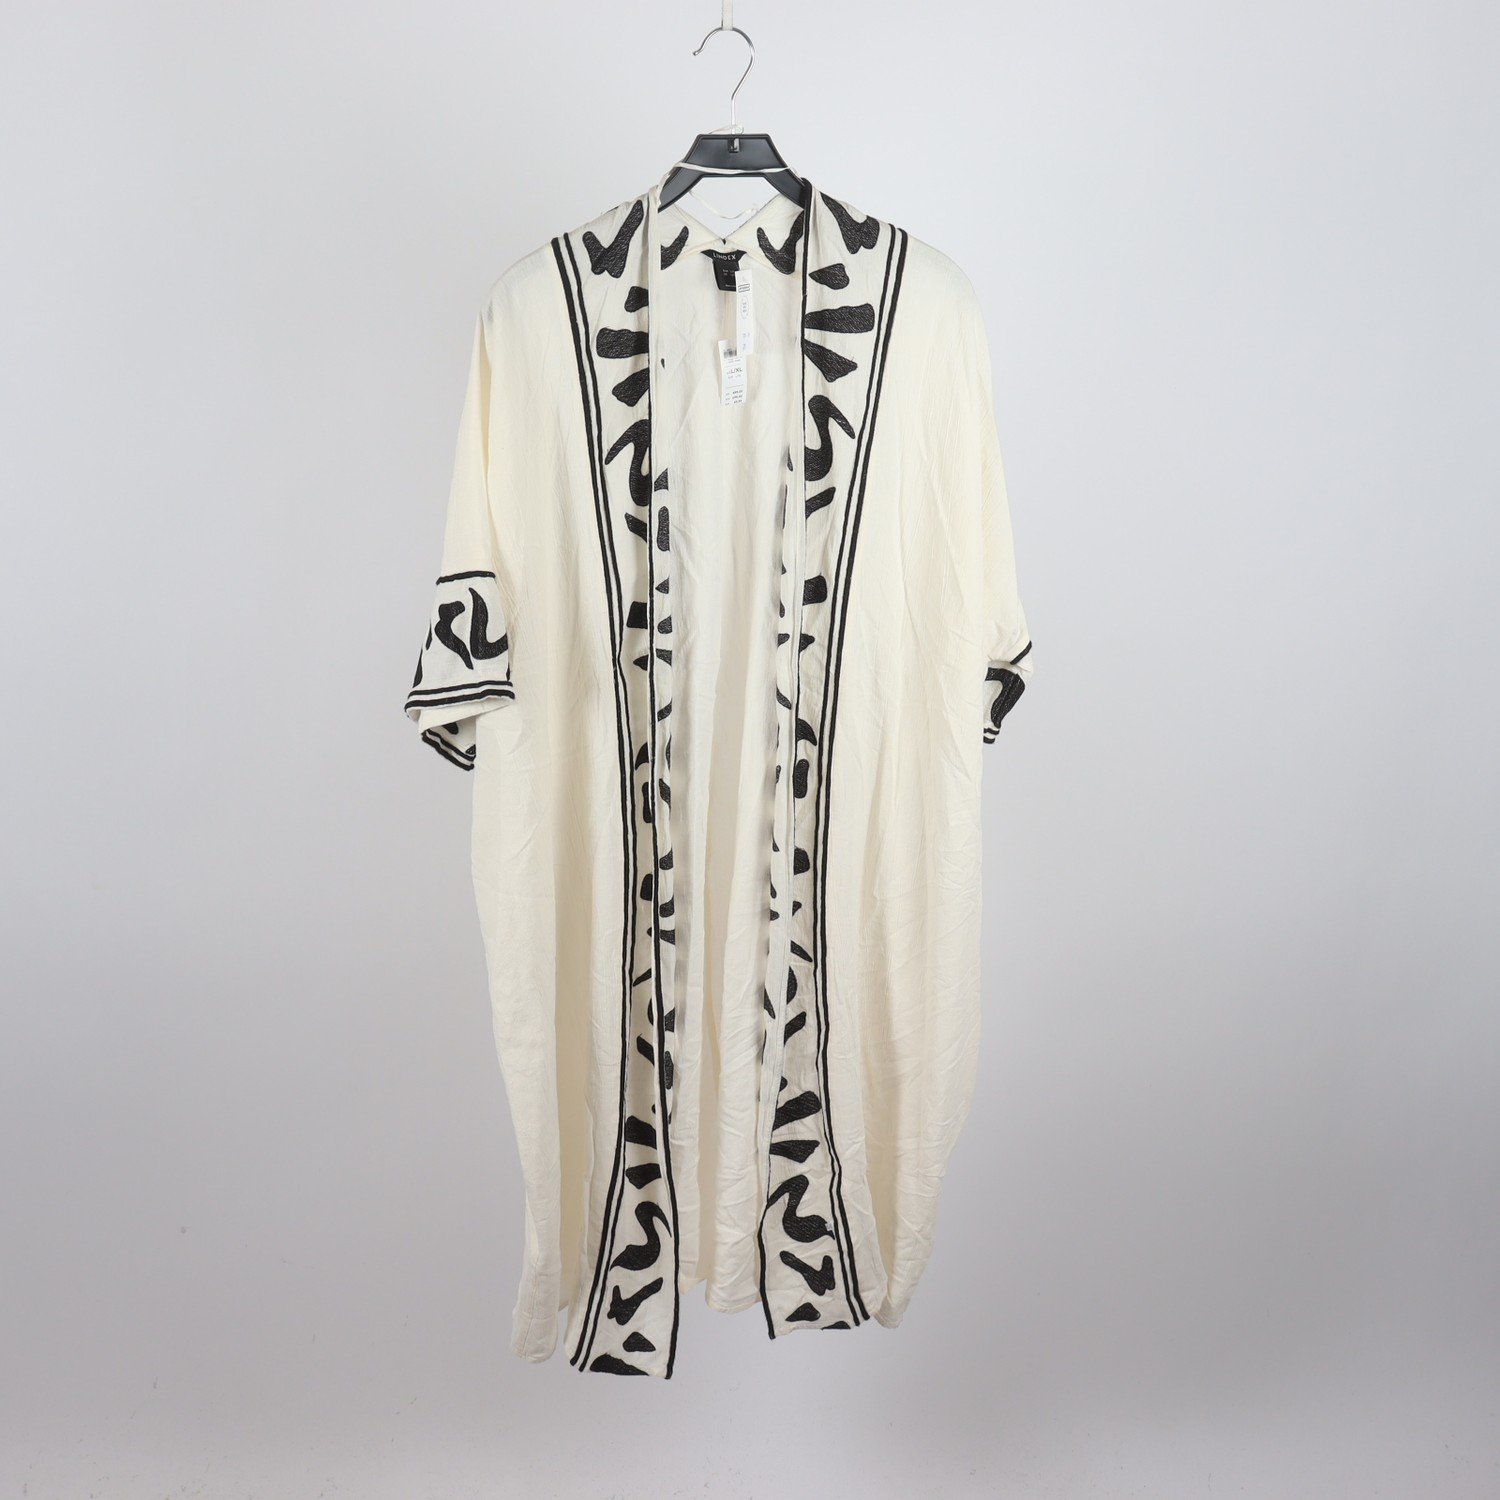 Strandklänning, Lindex, vit/svart, stl. L/XL